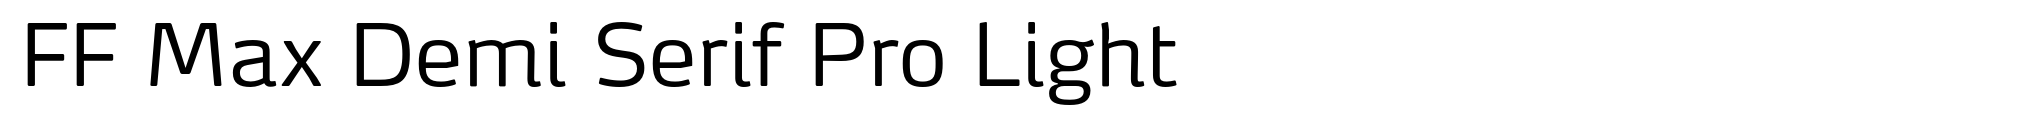 FF Max Demi Serif Pro Light image